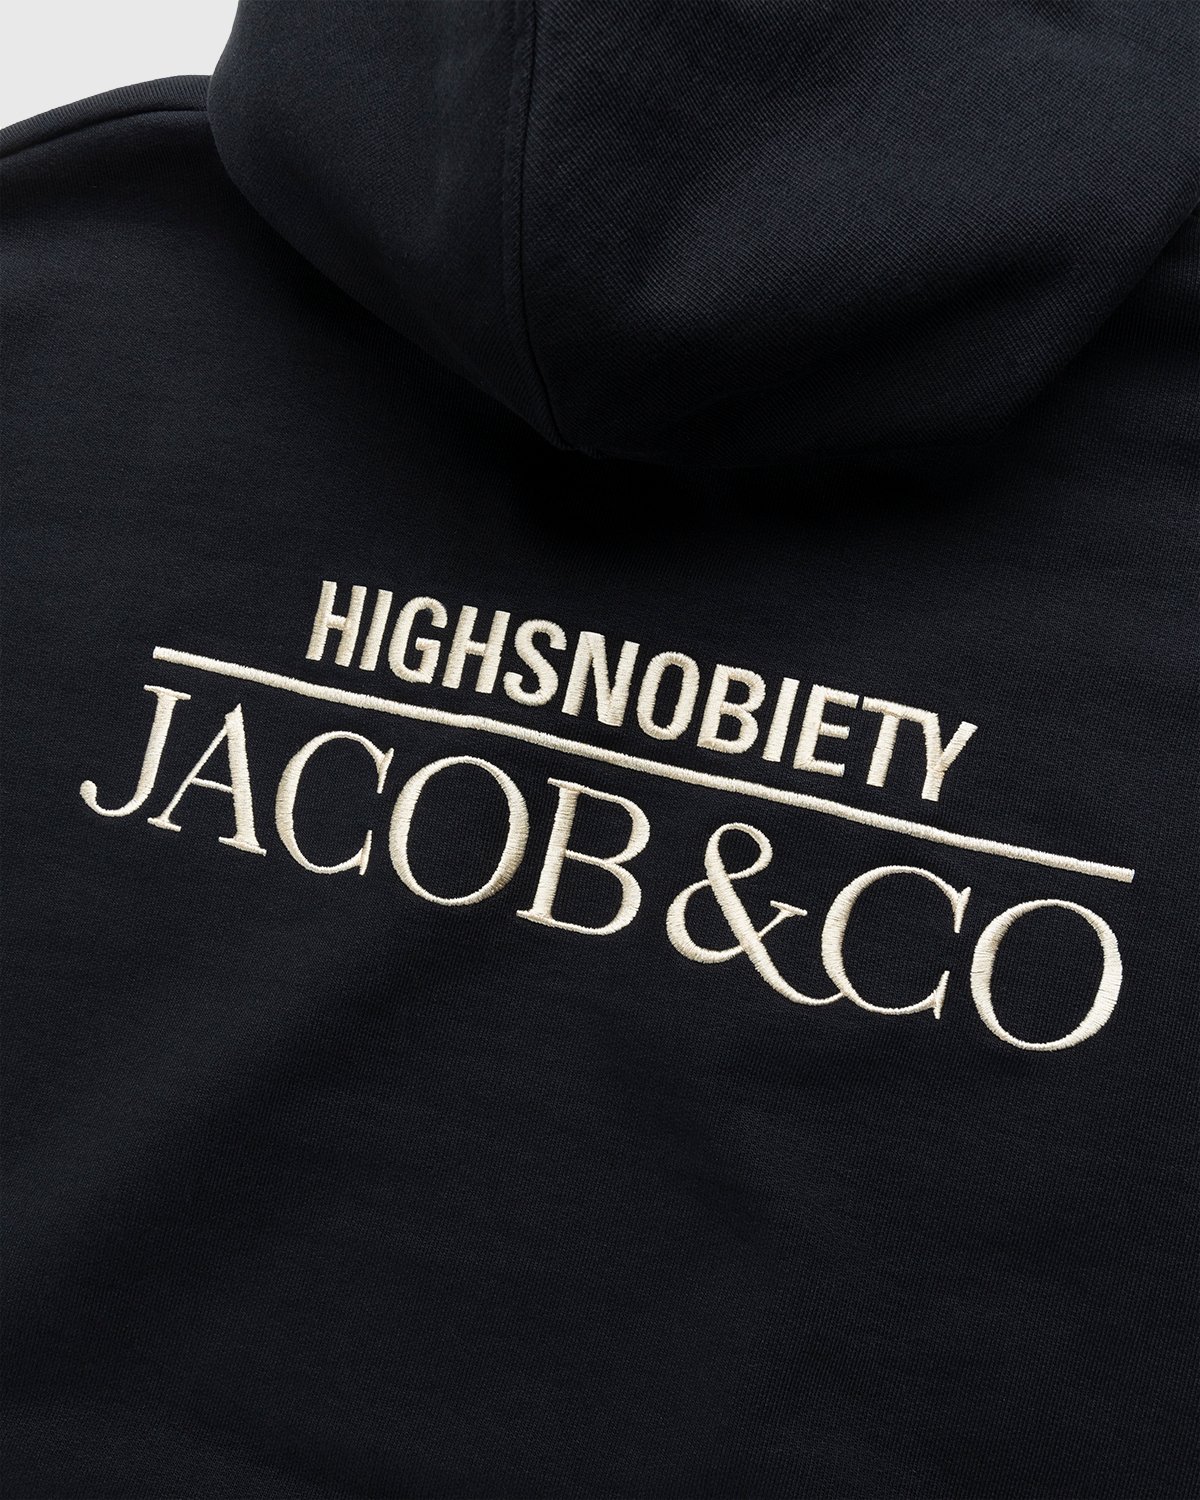 Jacob & Co. x Highsnobiety - City Fleece Hoodie Black - Clothing - Black - Image 3